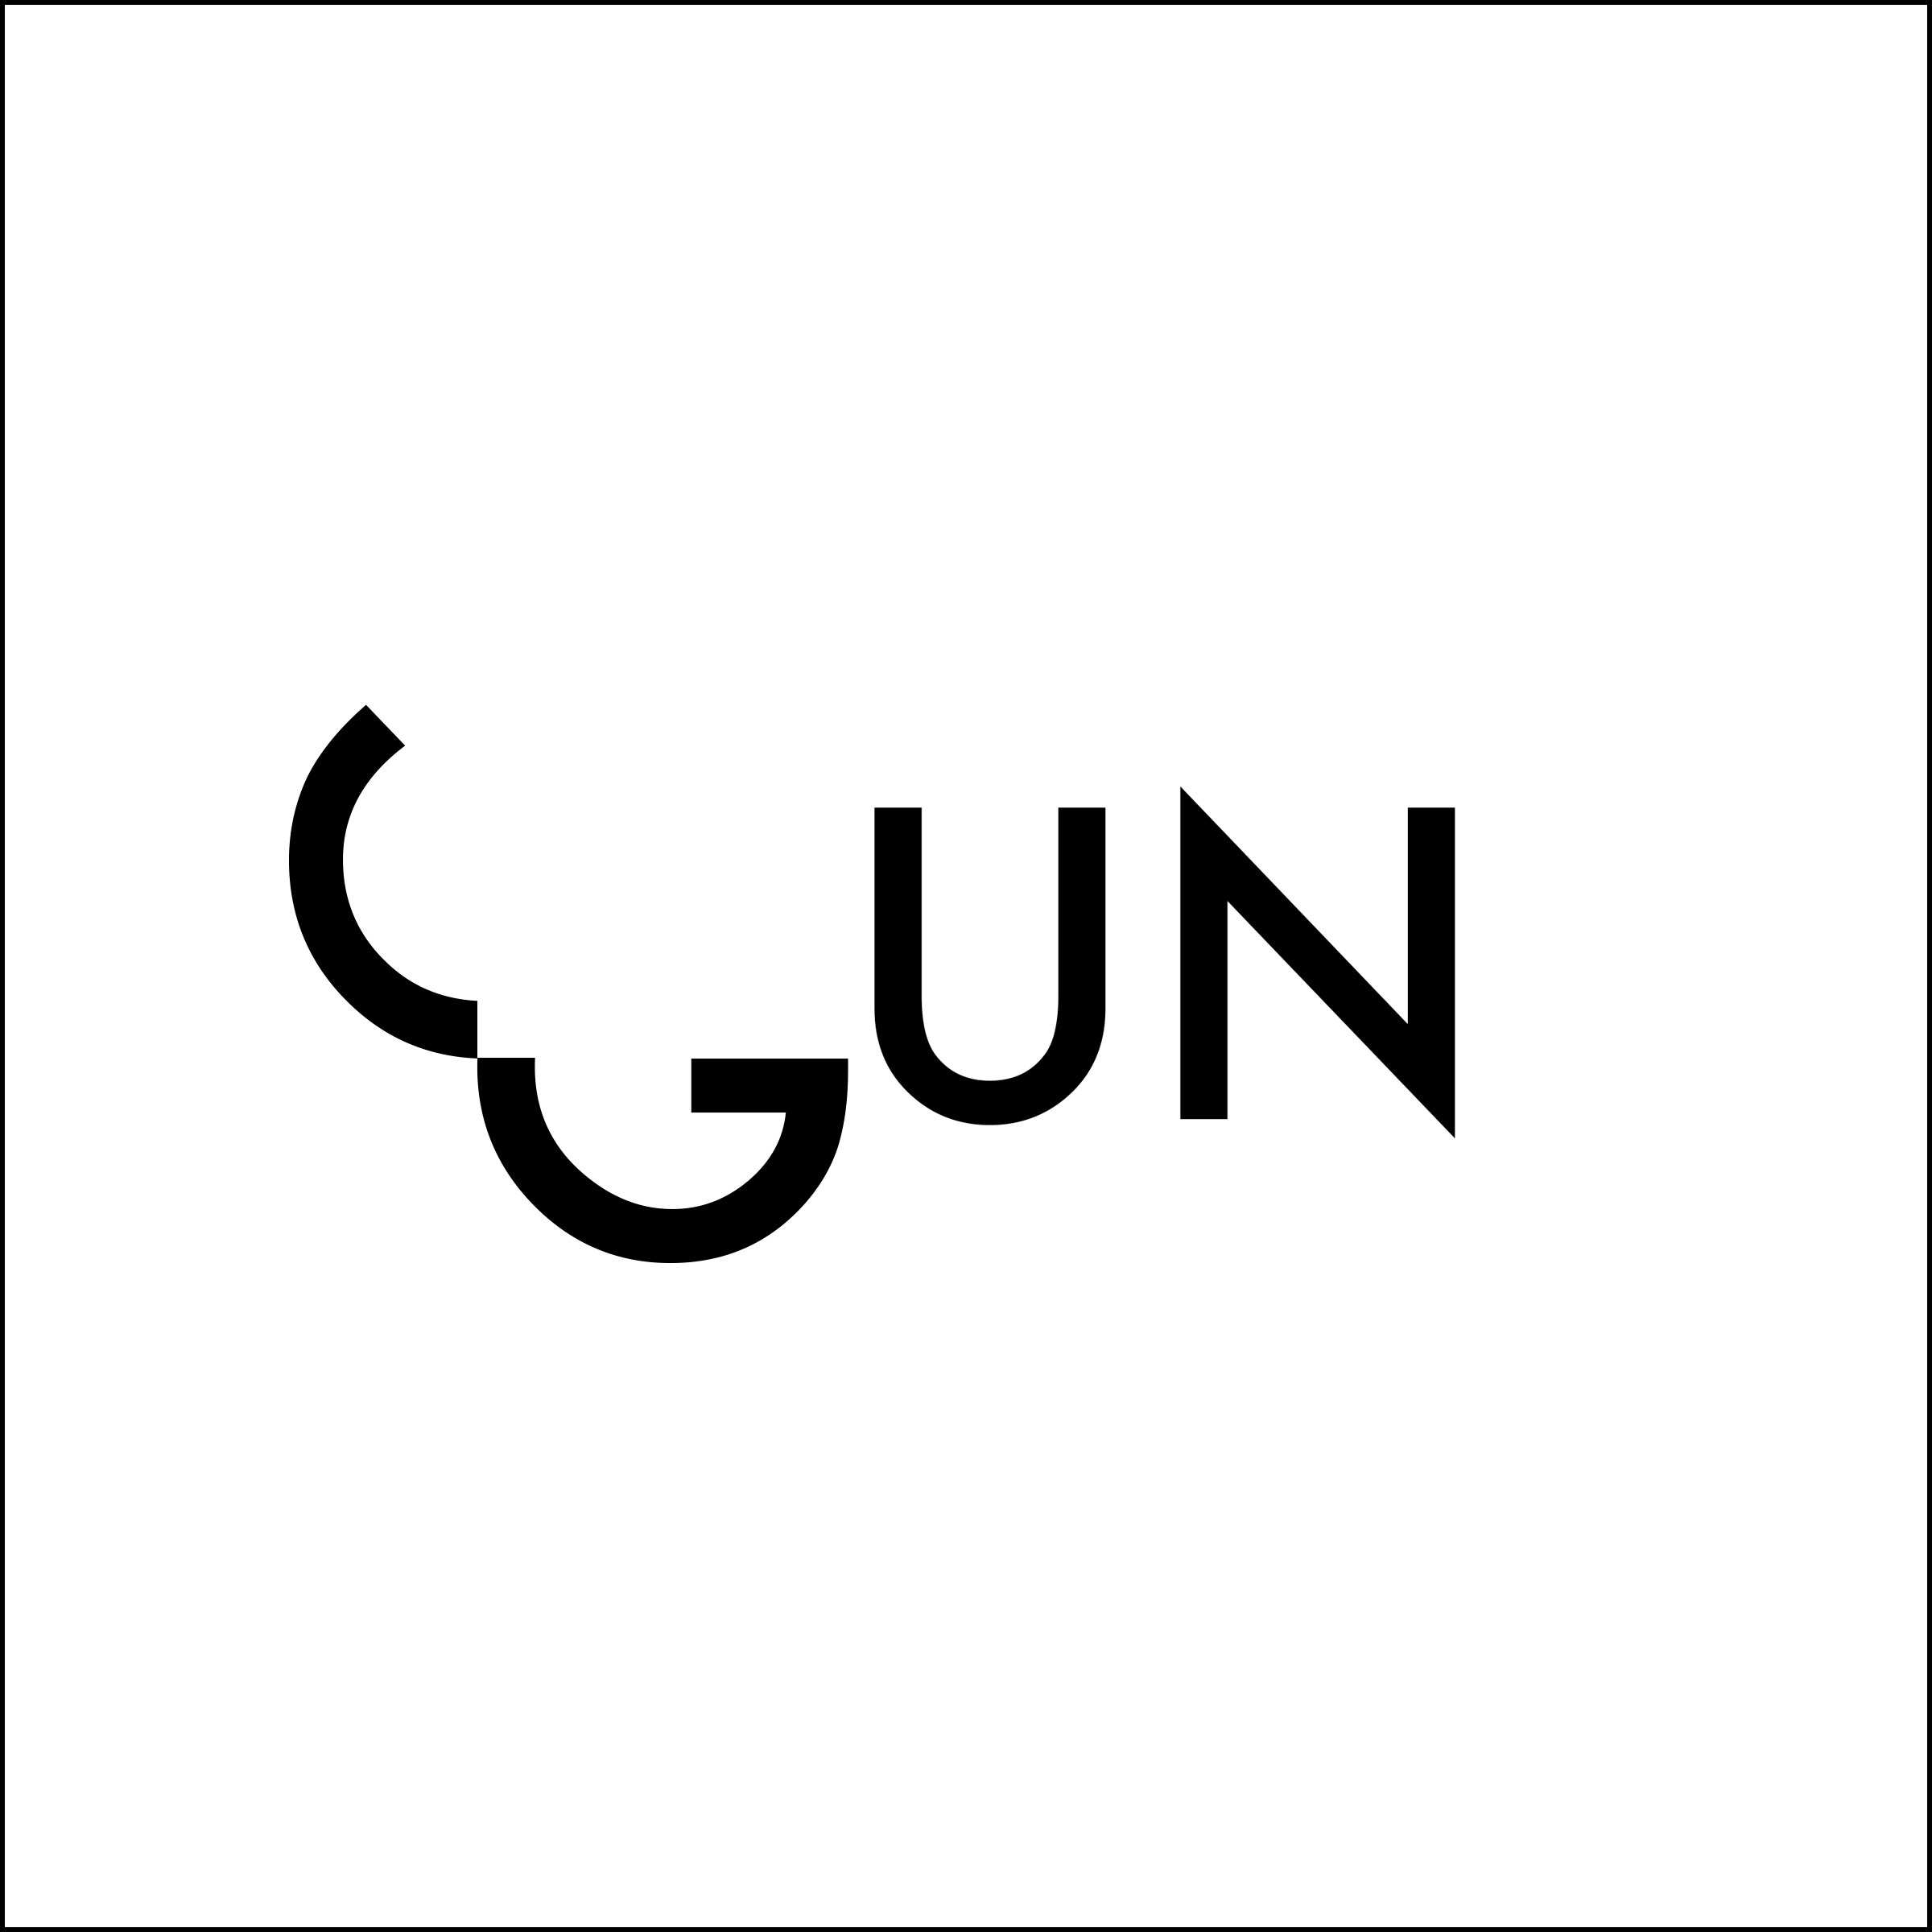 paul kisling – "gun" cocked